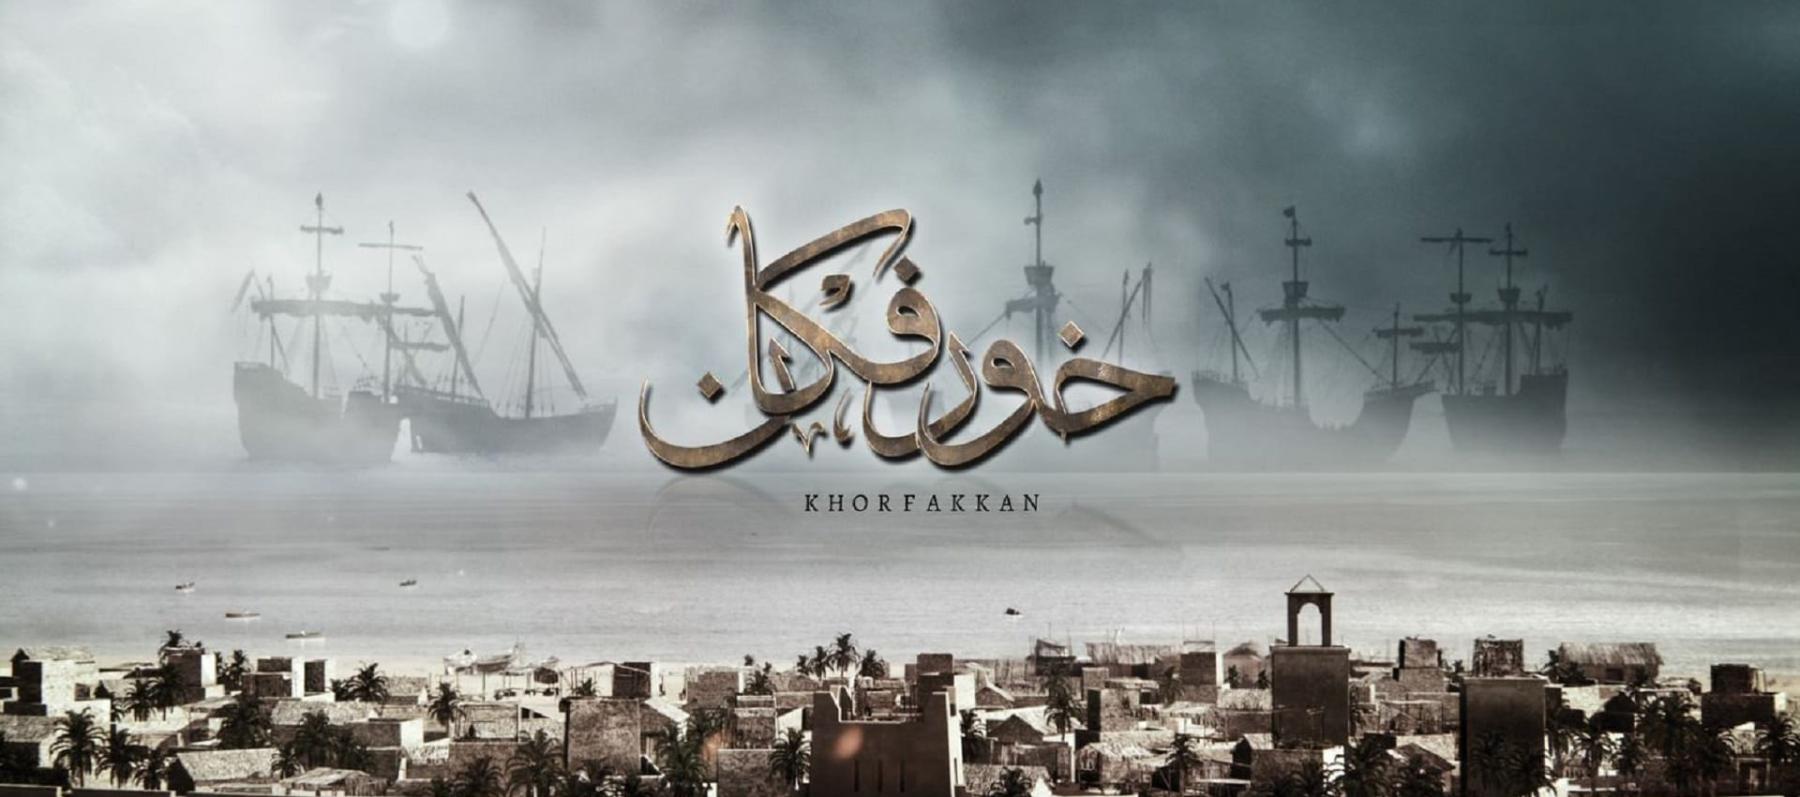 You are currently viewing الفيلم الإماراتي “خورفكان” يفوز بجائزة أفضل فيلم في إيطاليا